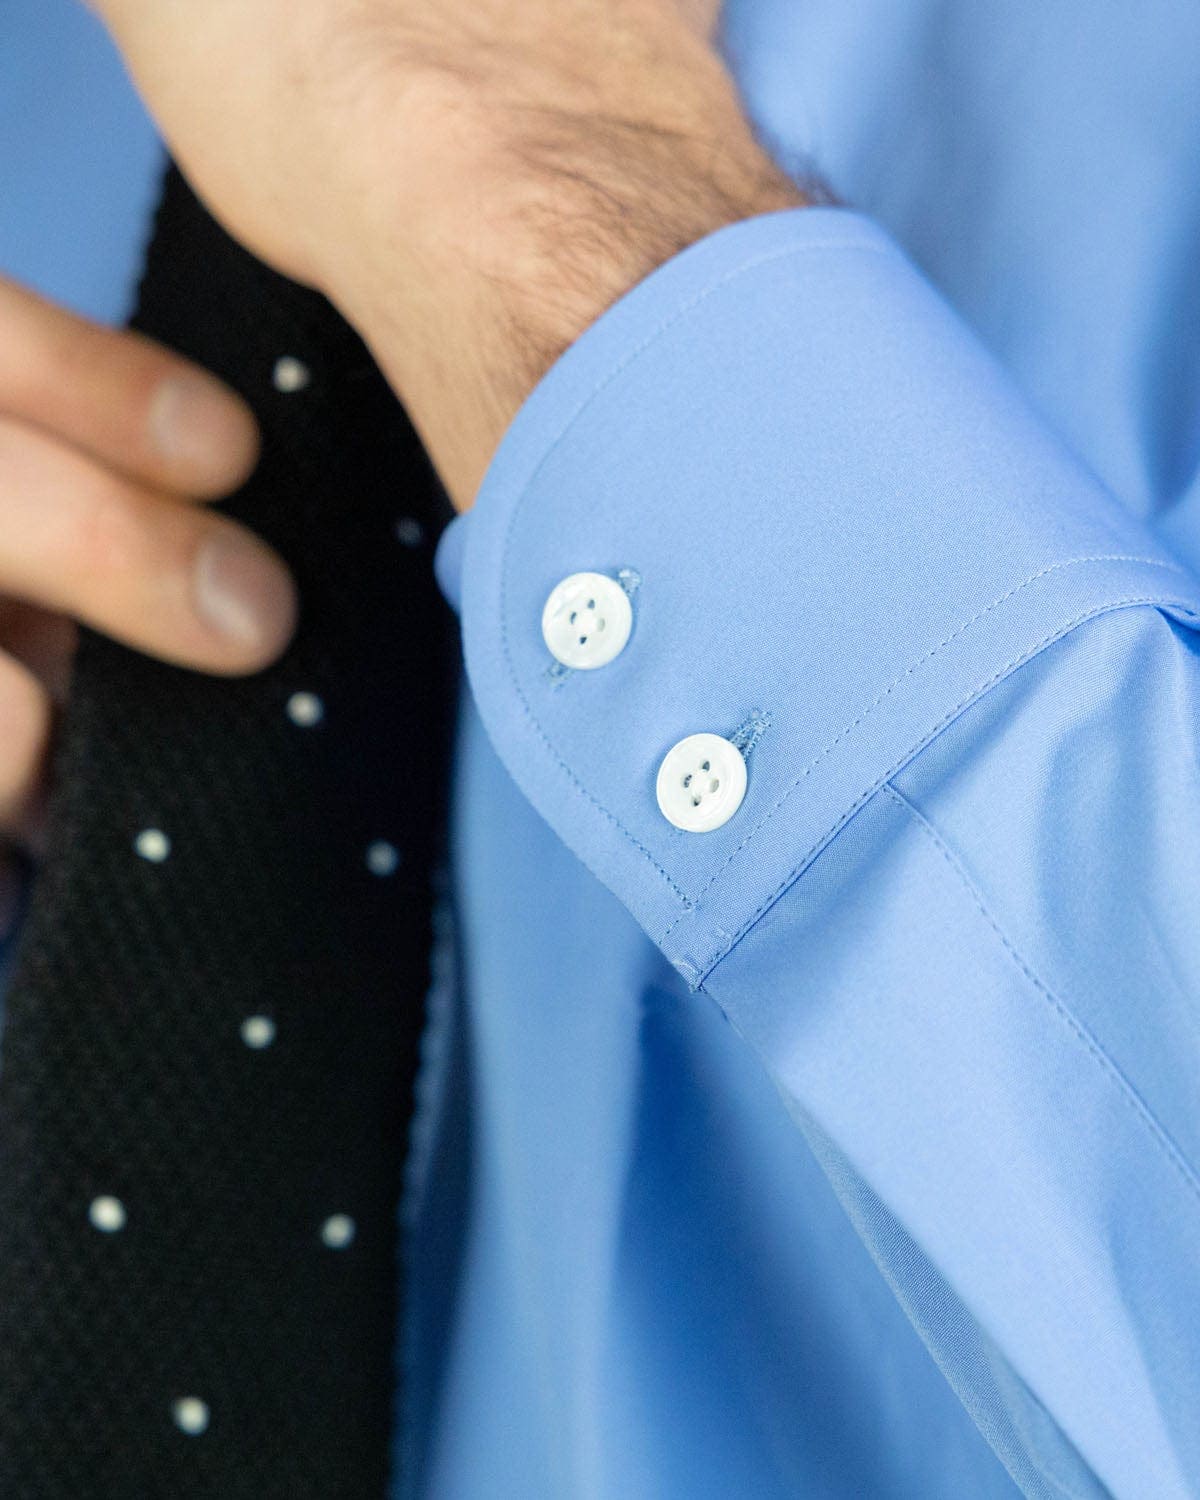 Classic Fit, Cut-away Collar, 2 Button Cuff Shirt in a Plain Blue Poplin Cotton - Hilditch & Key